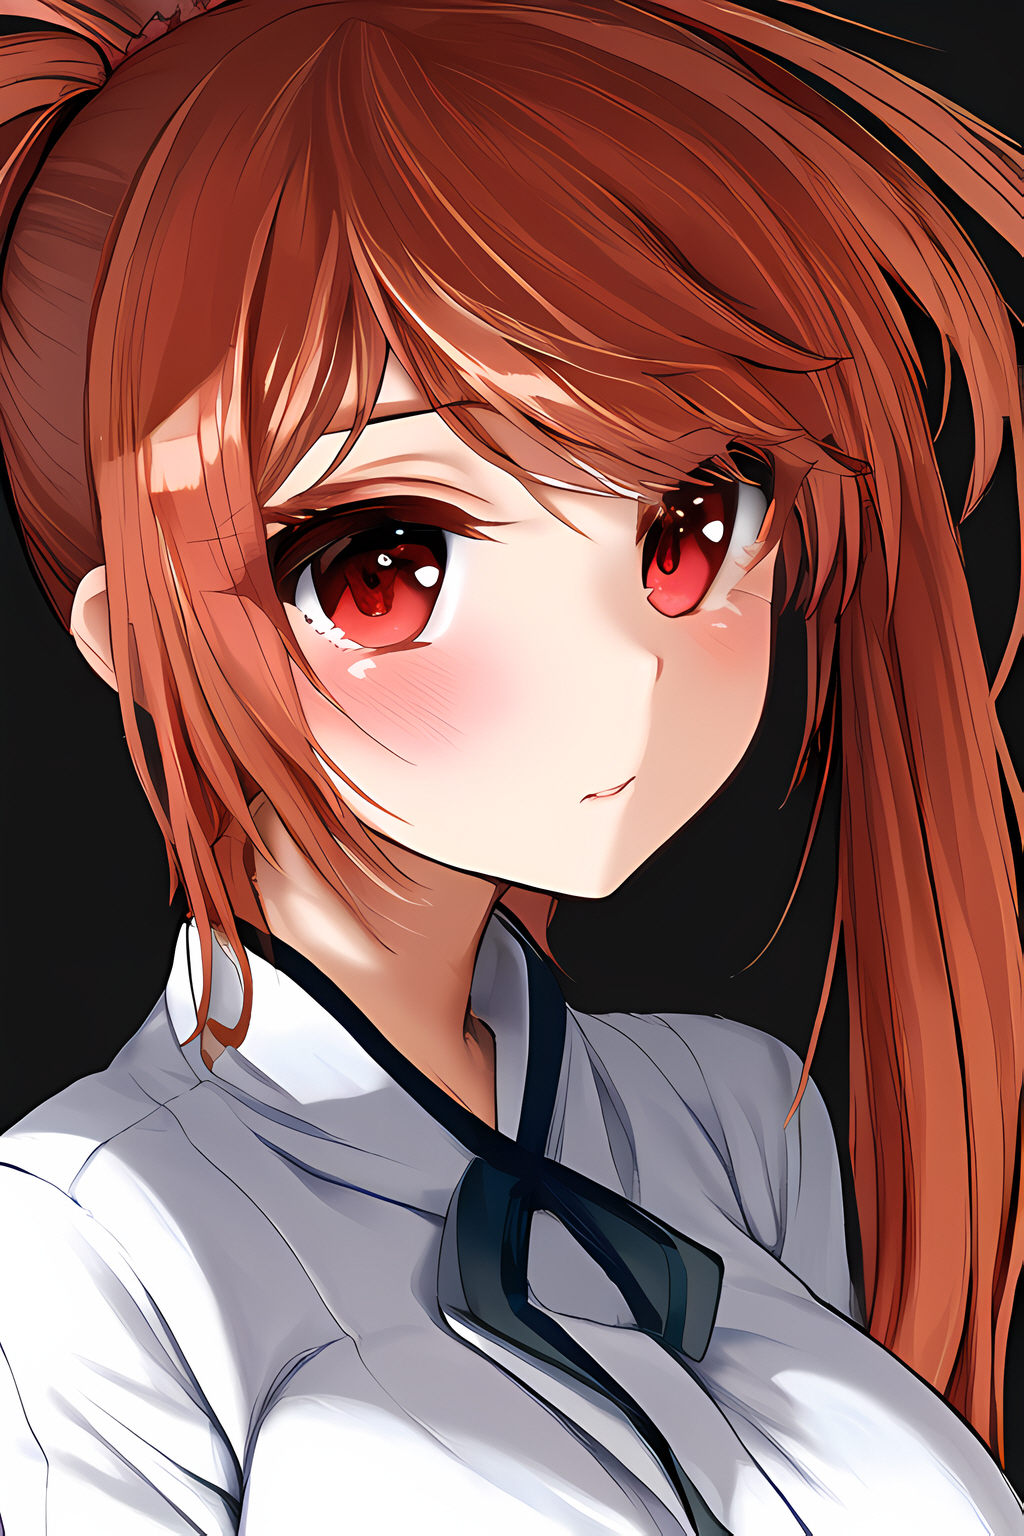 Beautiful Anime kawaii cute Girl by SianWorld on DeviantArt